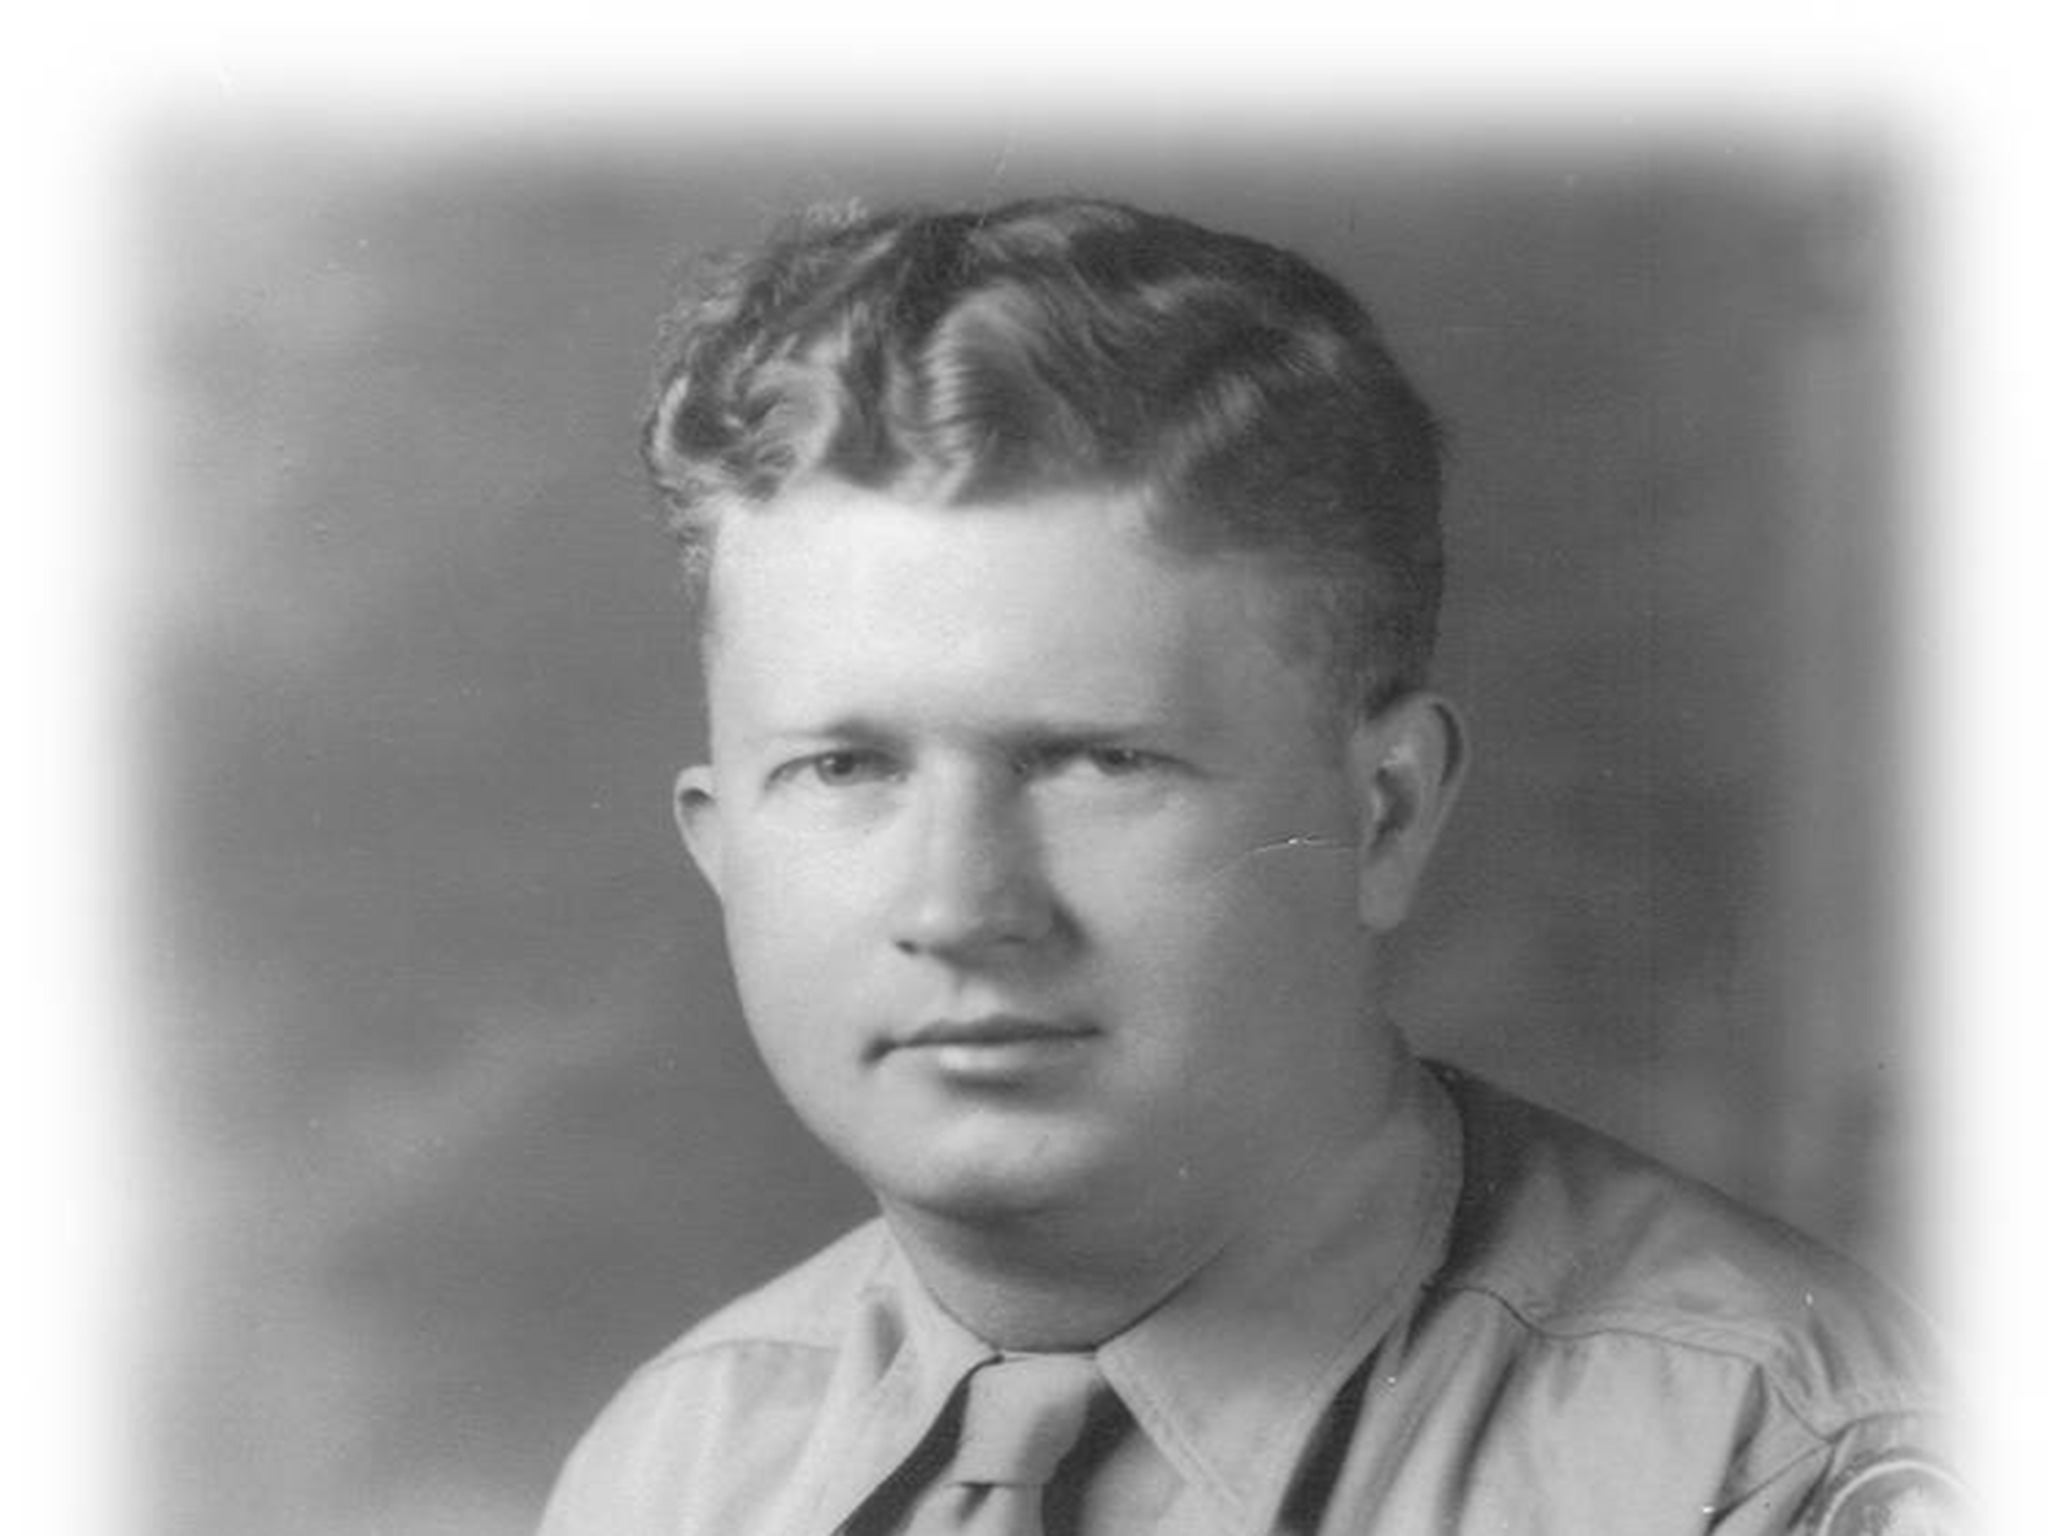 Sgt. Roddie Edmonds, who refused to designate Jewish soldiers in German POW camp